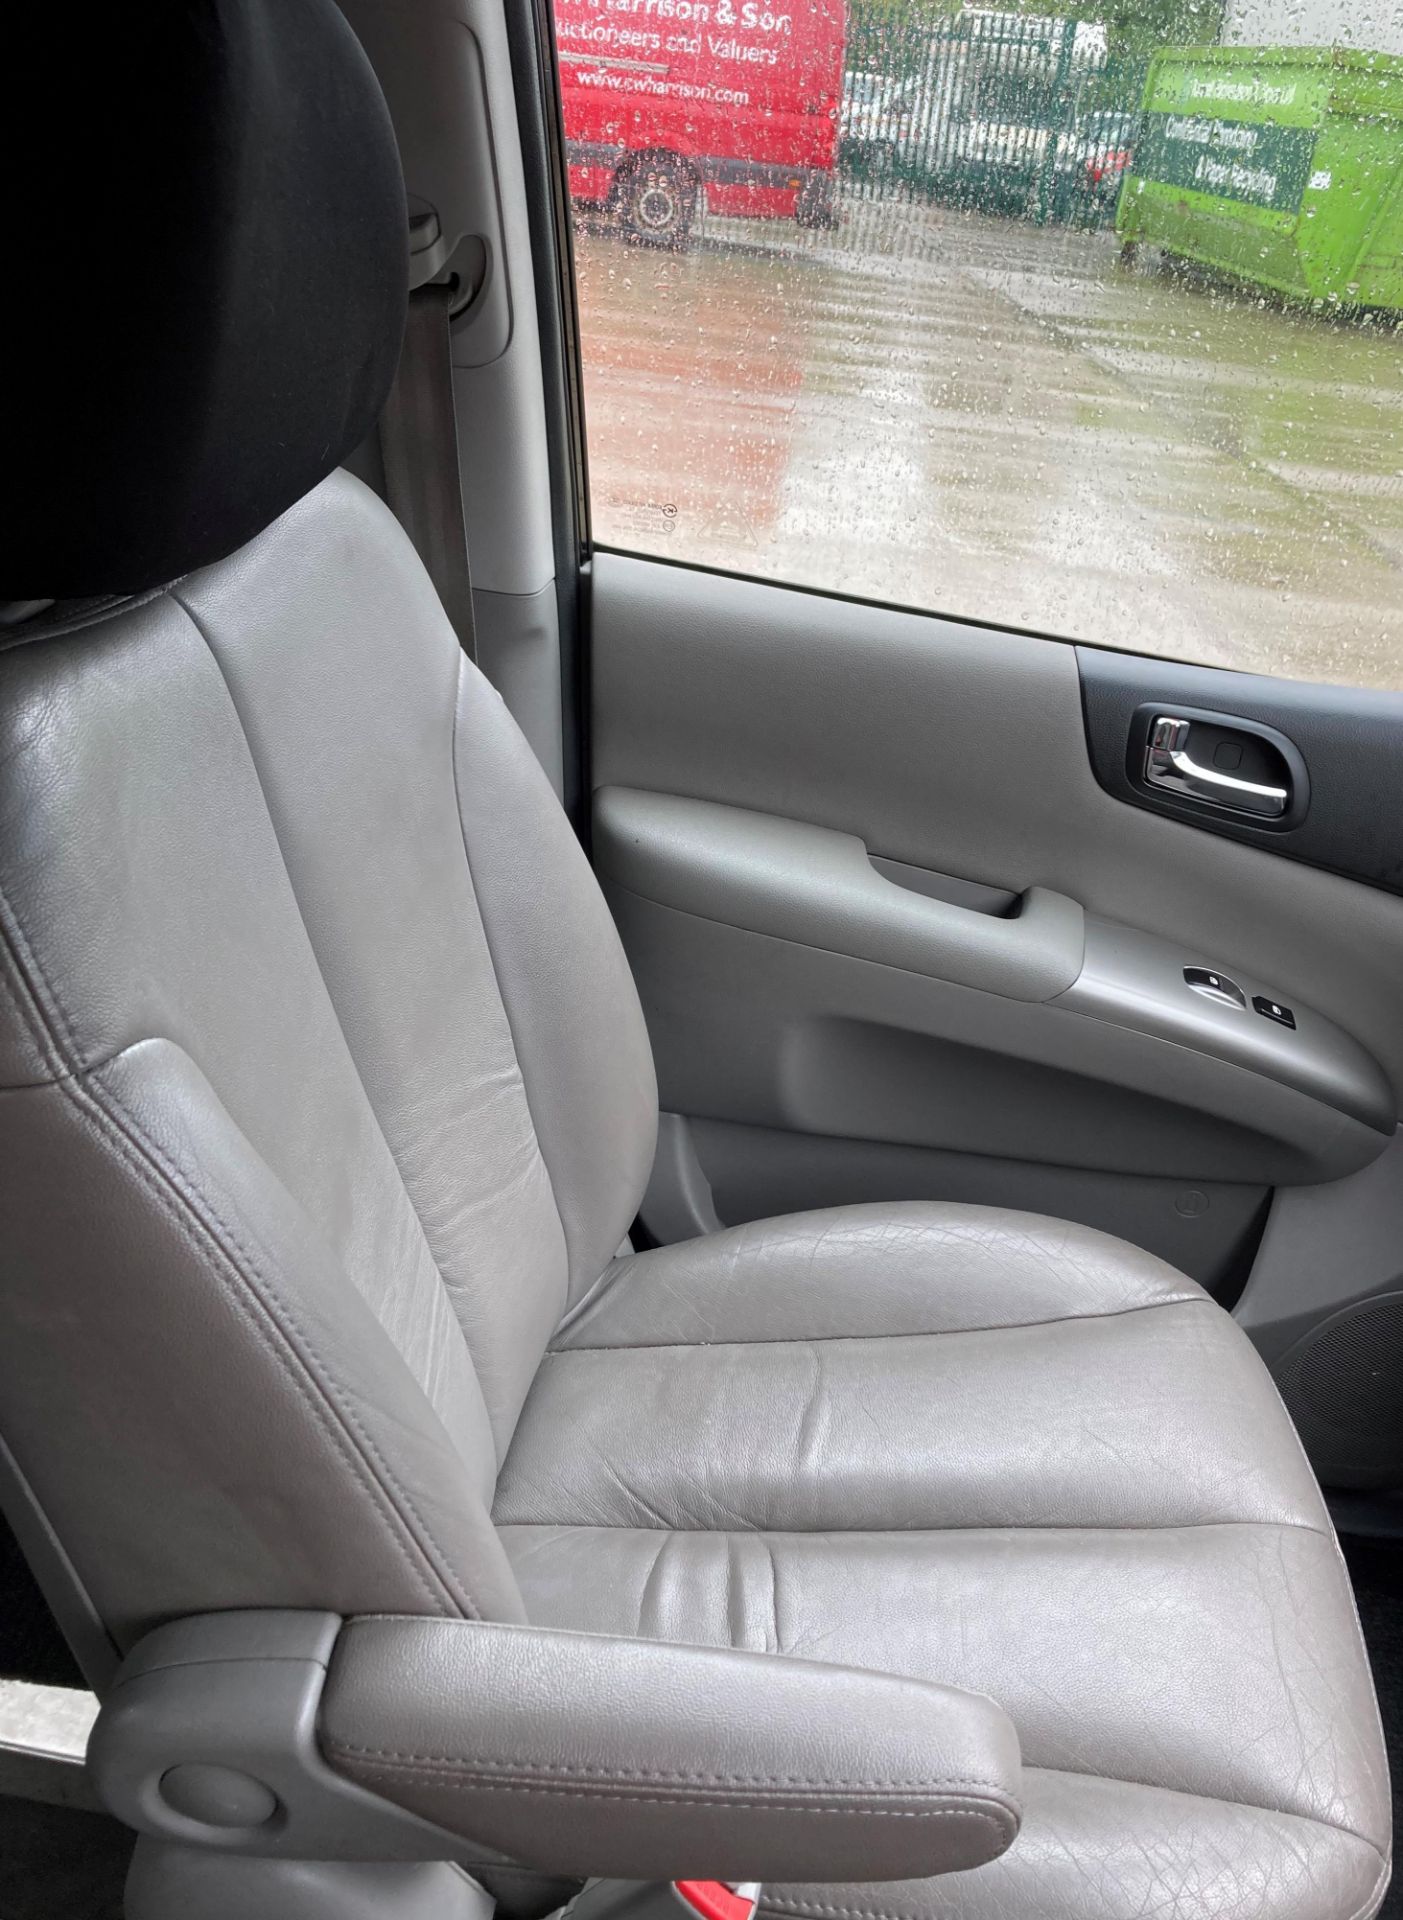 KIA SEDONA 3 CRDi AUTO MPV - Diesel - Black - Passenger seat dark grey leather, - Image 13 of 22